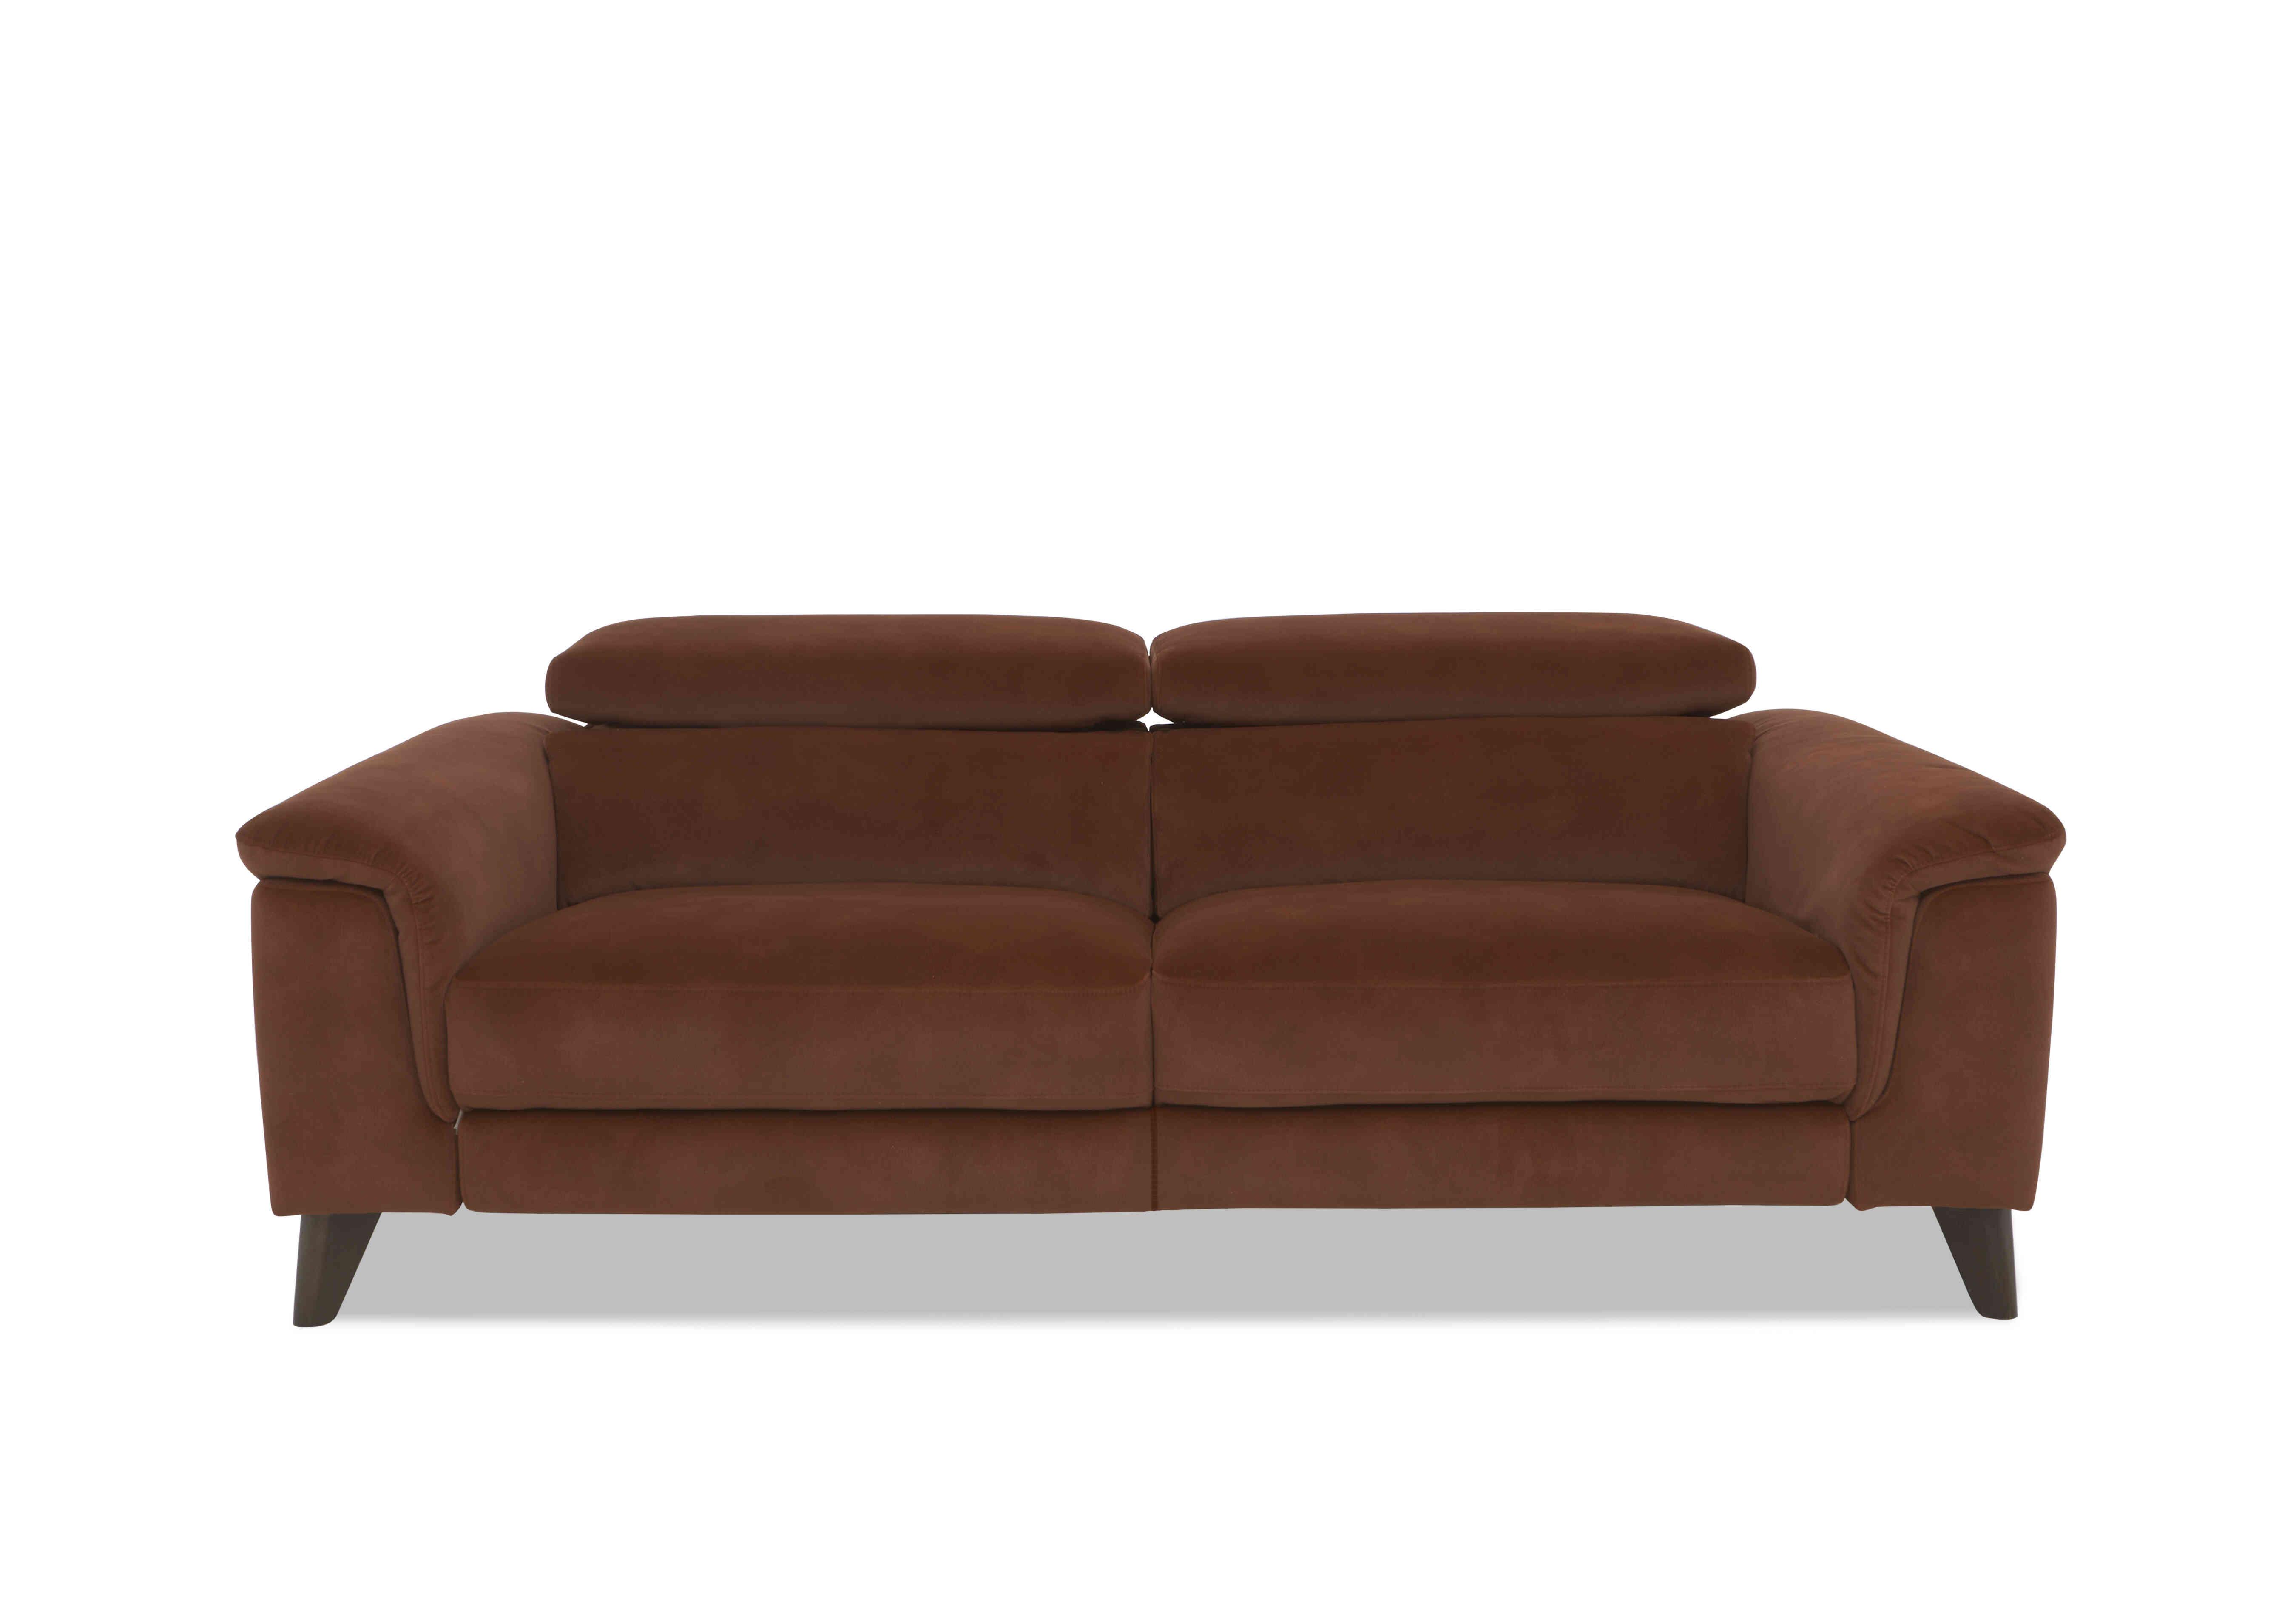 Wade 3 Seater Fabric Sofa in Sfa-Pey-R06 Caramel on Furniture Village